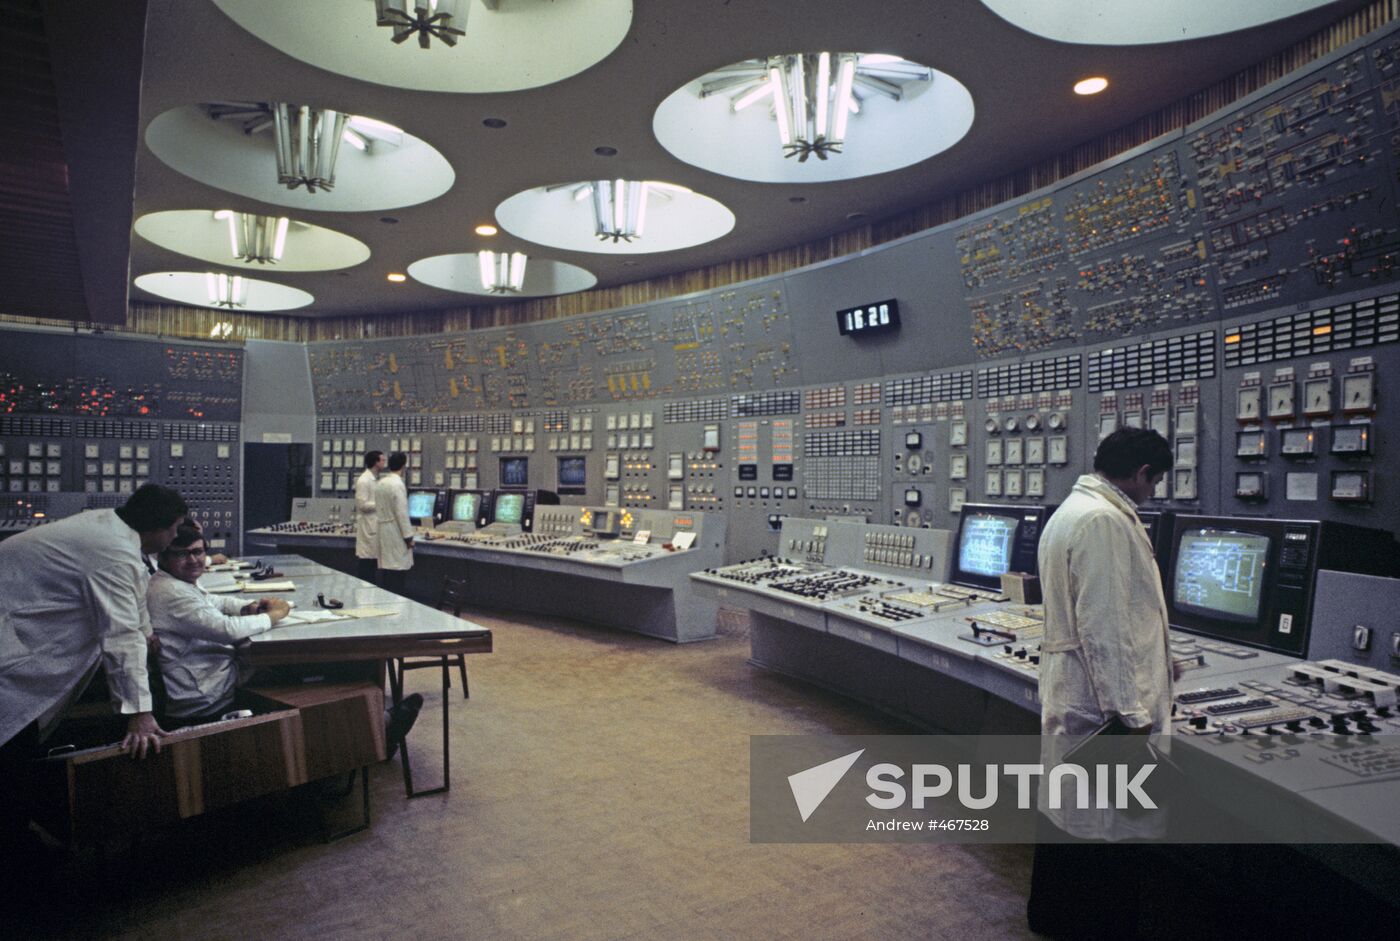 Energy unit control panel